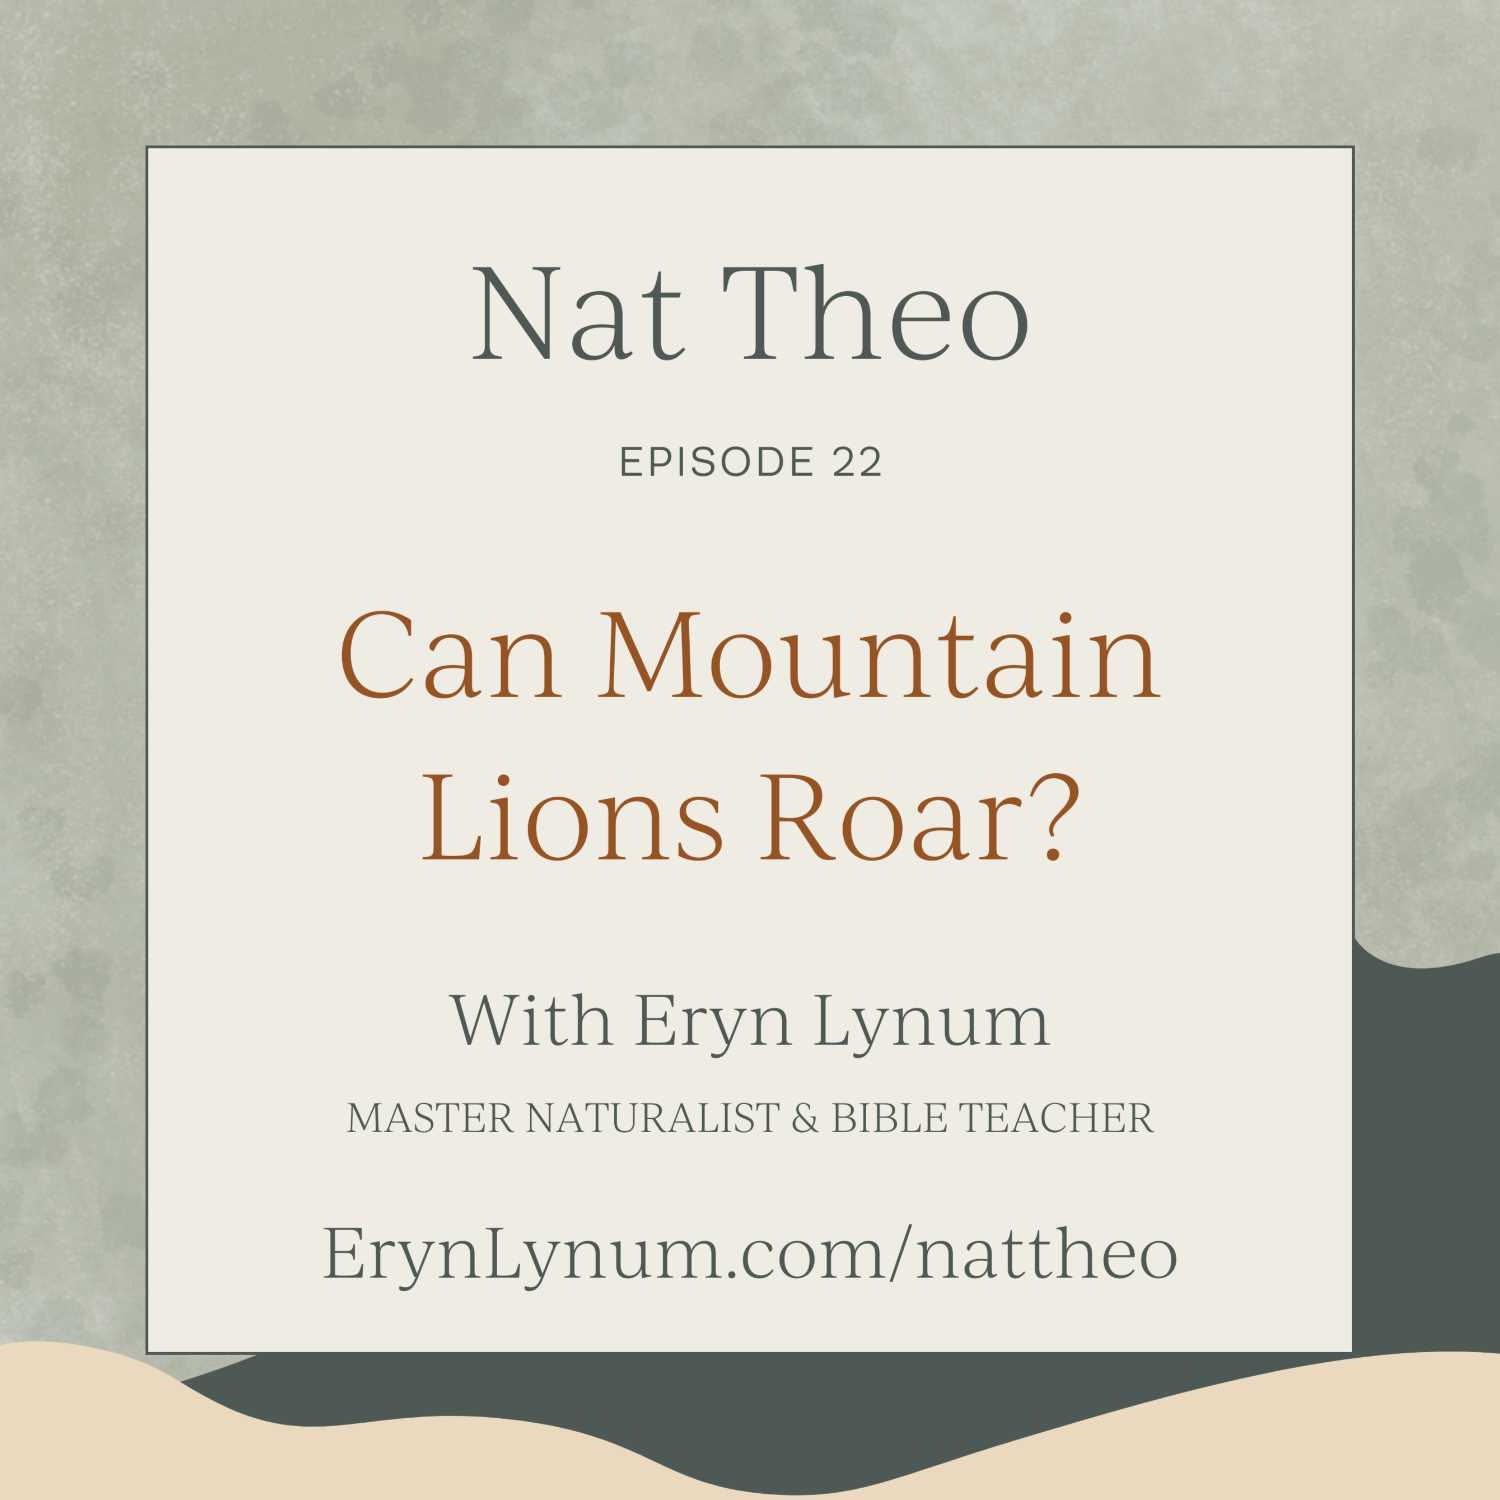 Can Mountain Lions Roar? Episode 22